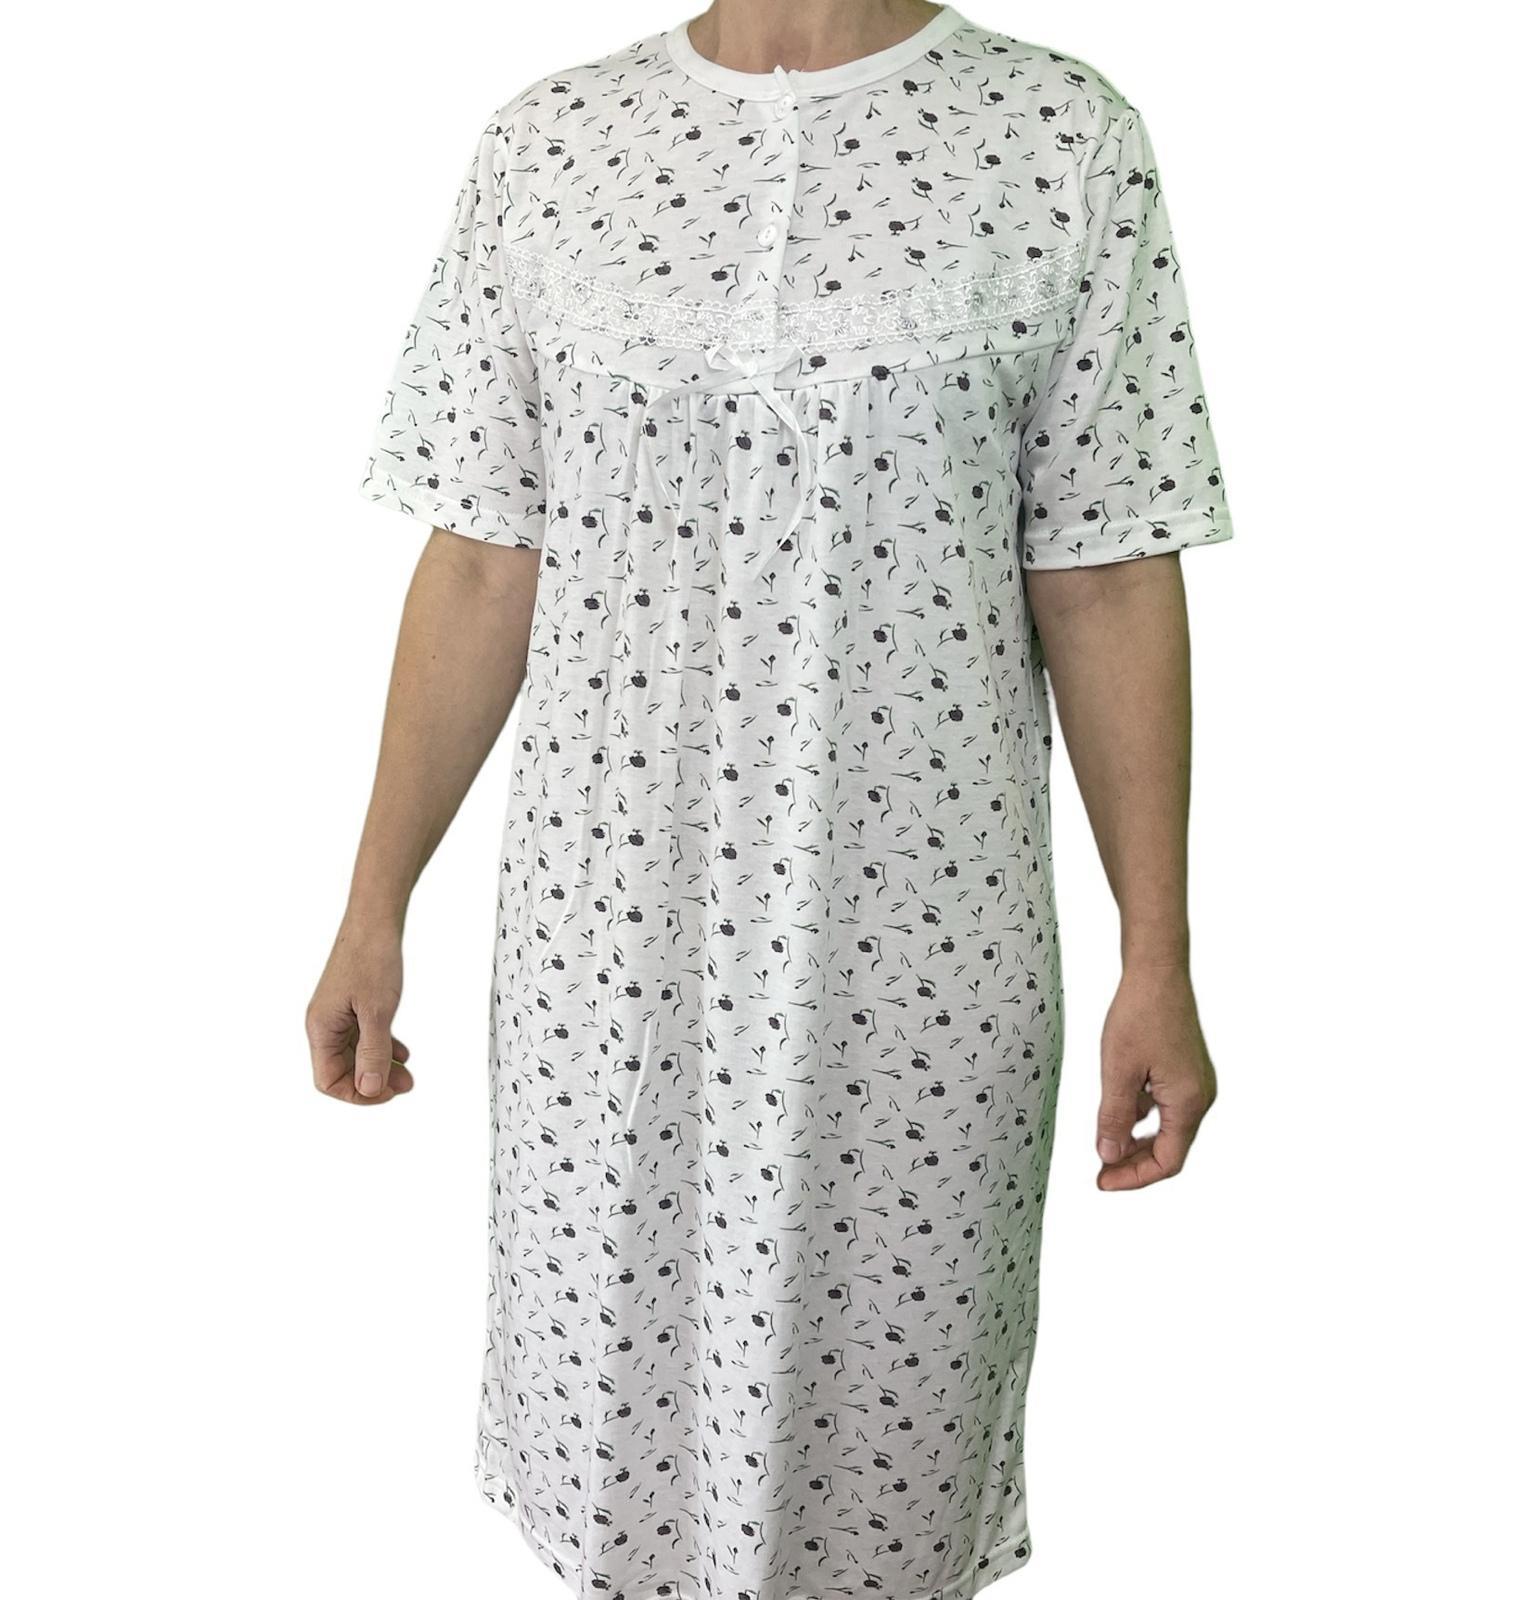 Womens Ladies Cotton Nightie Night Gown Slip Petticoat PJs Sleepwear Dress - White/Purple - 12